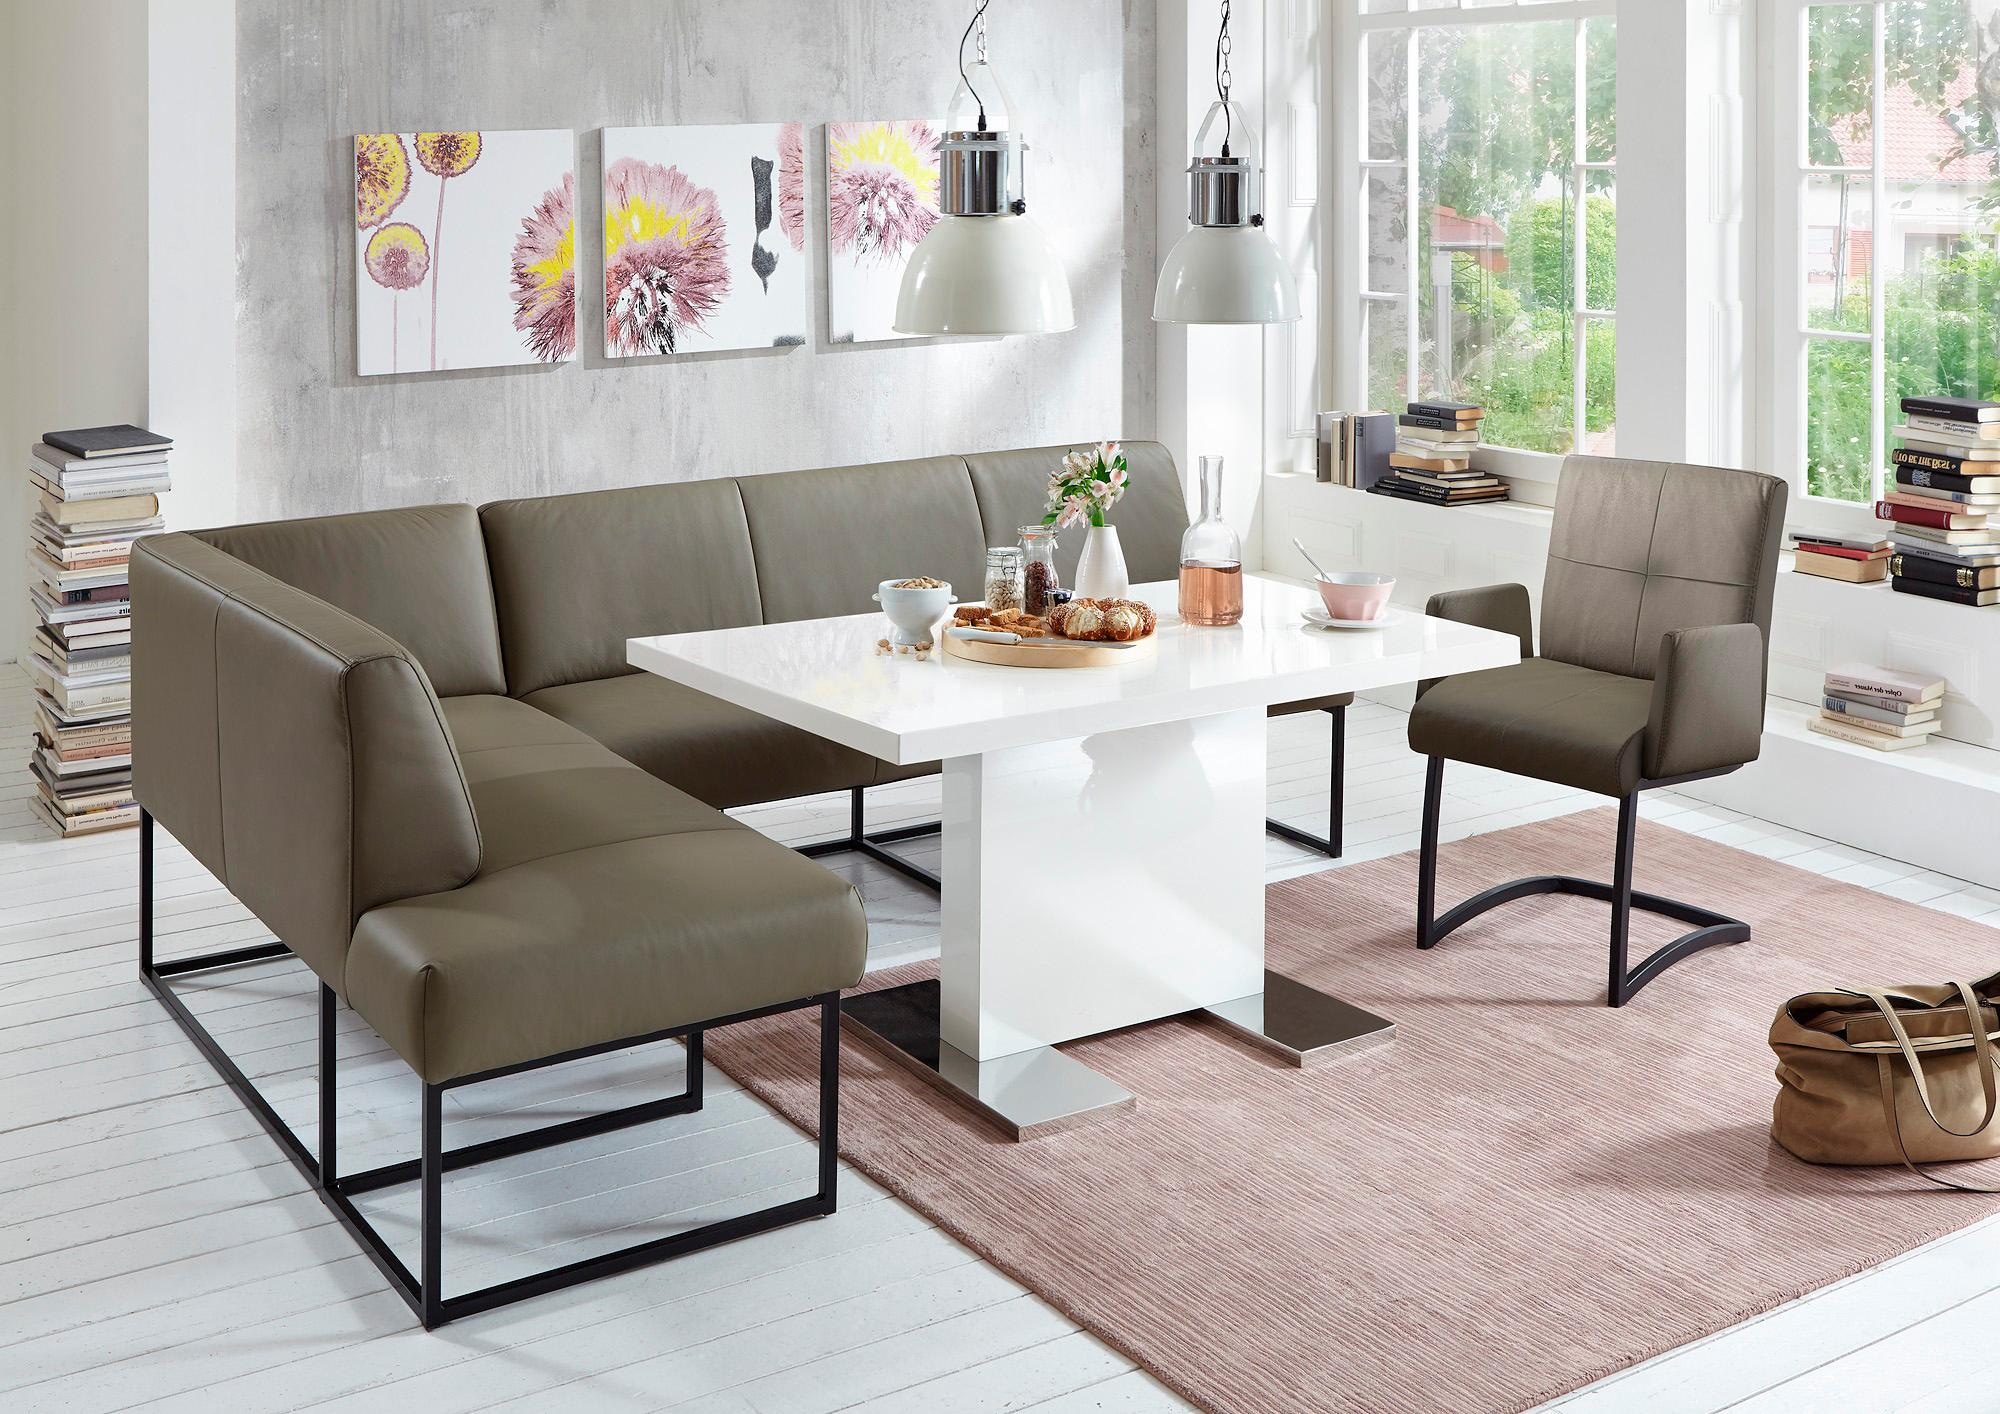 bestellen exxpo »Affogato«, im stellbar auf Eckbank fashion Raten Raum Frei - sofa